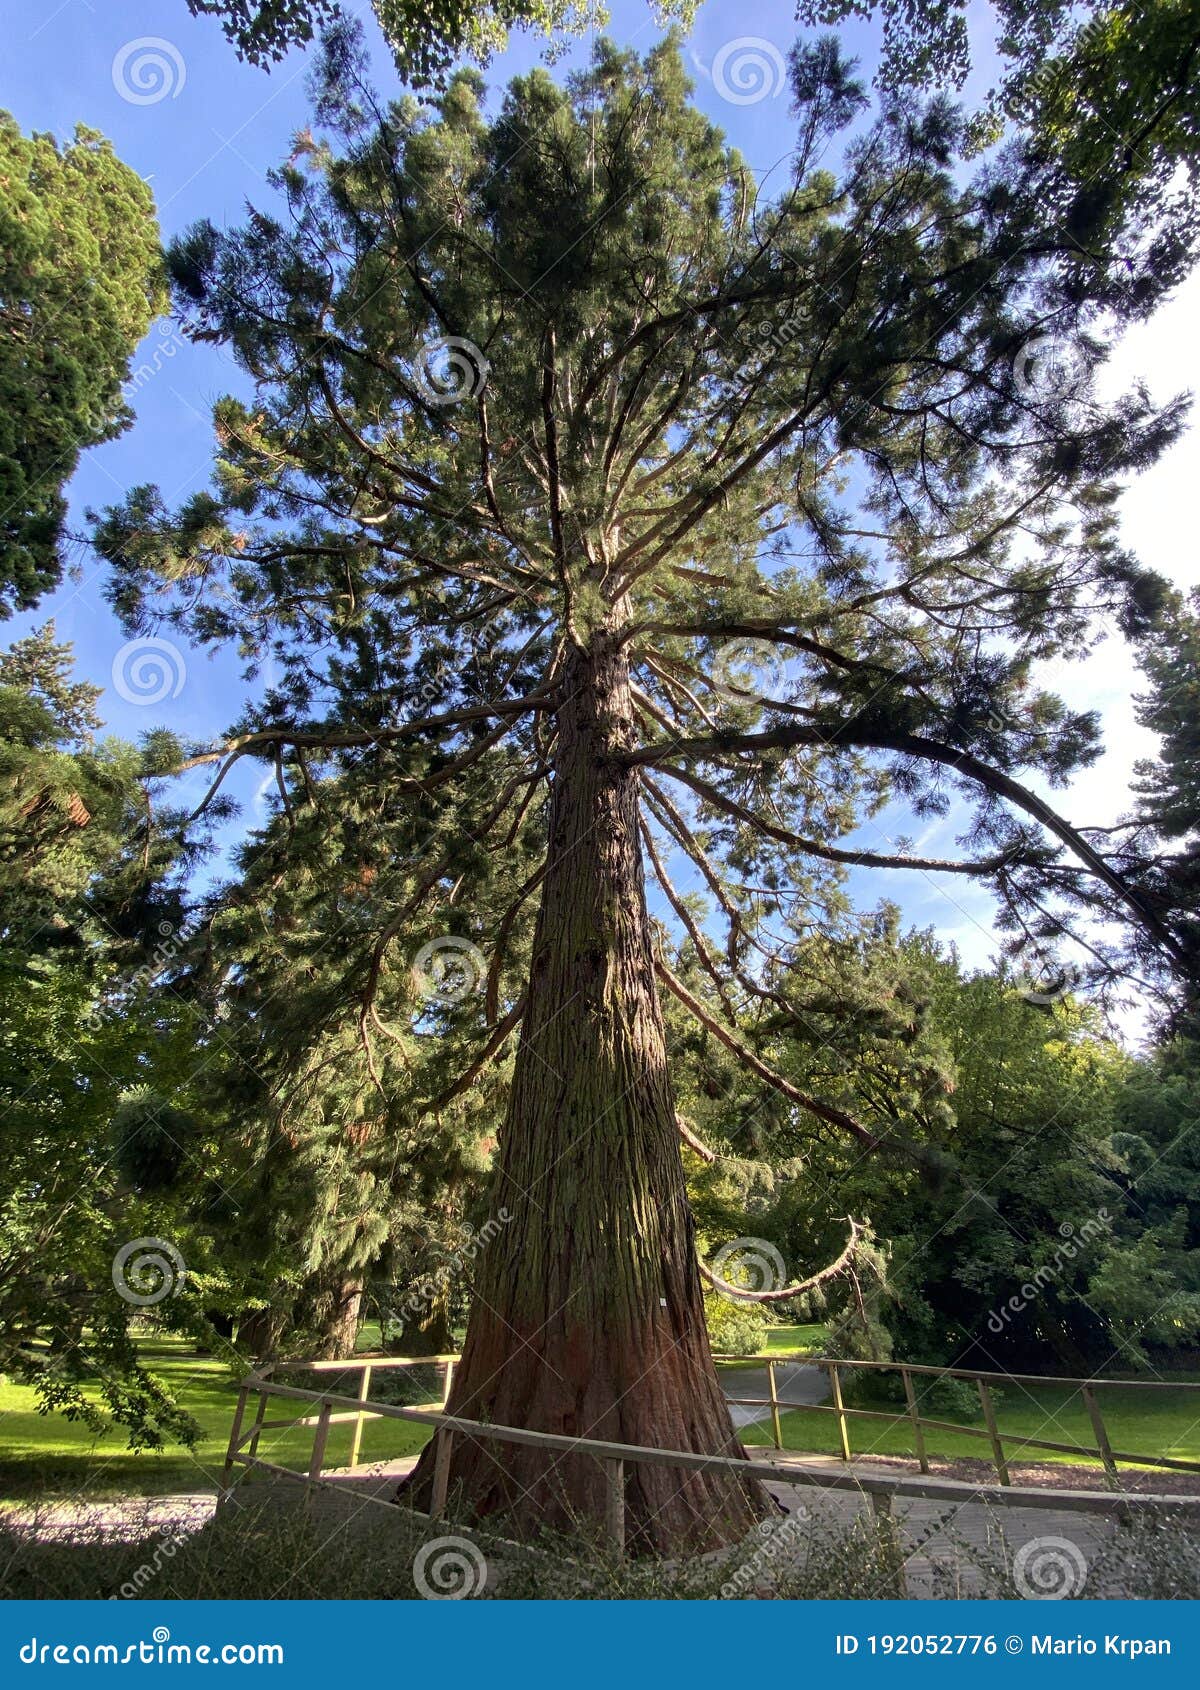 giant sequoia / sequoiadendron giganteum / giant redwood, sierra redwood, wellingtonia or kalifornischer berg-mammutbaum